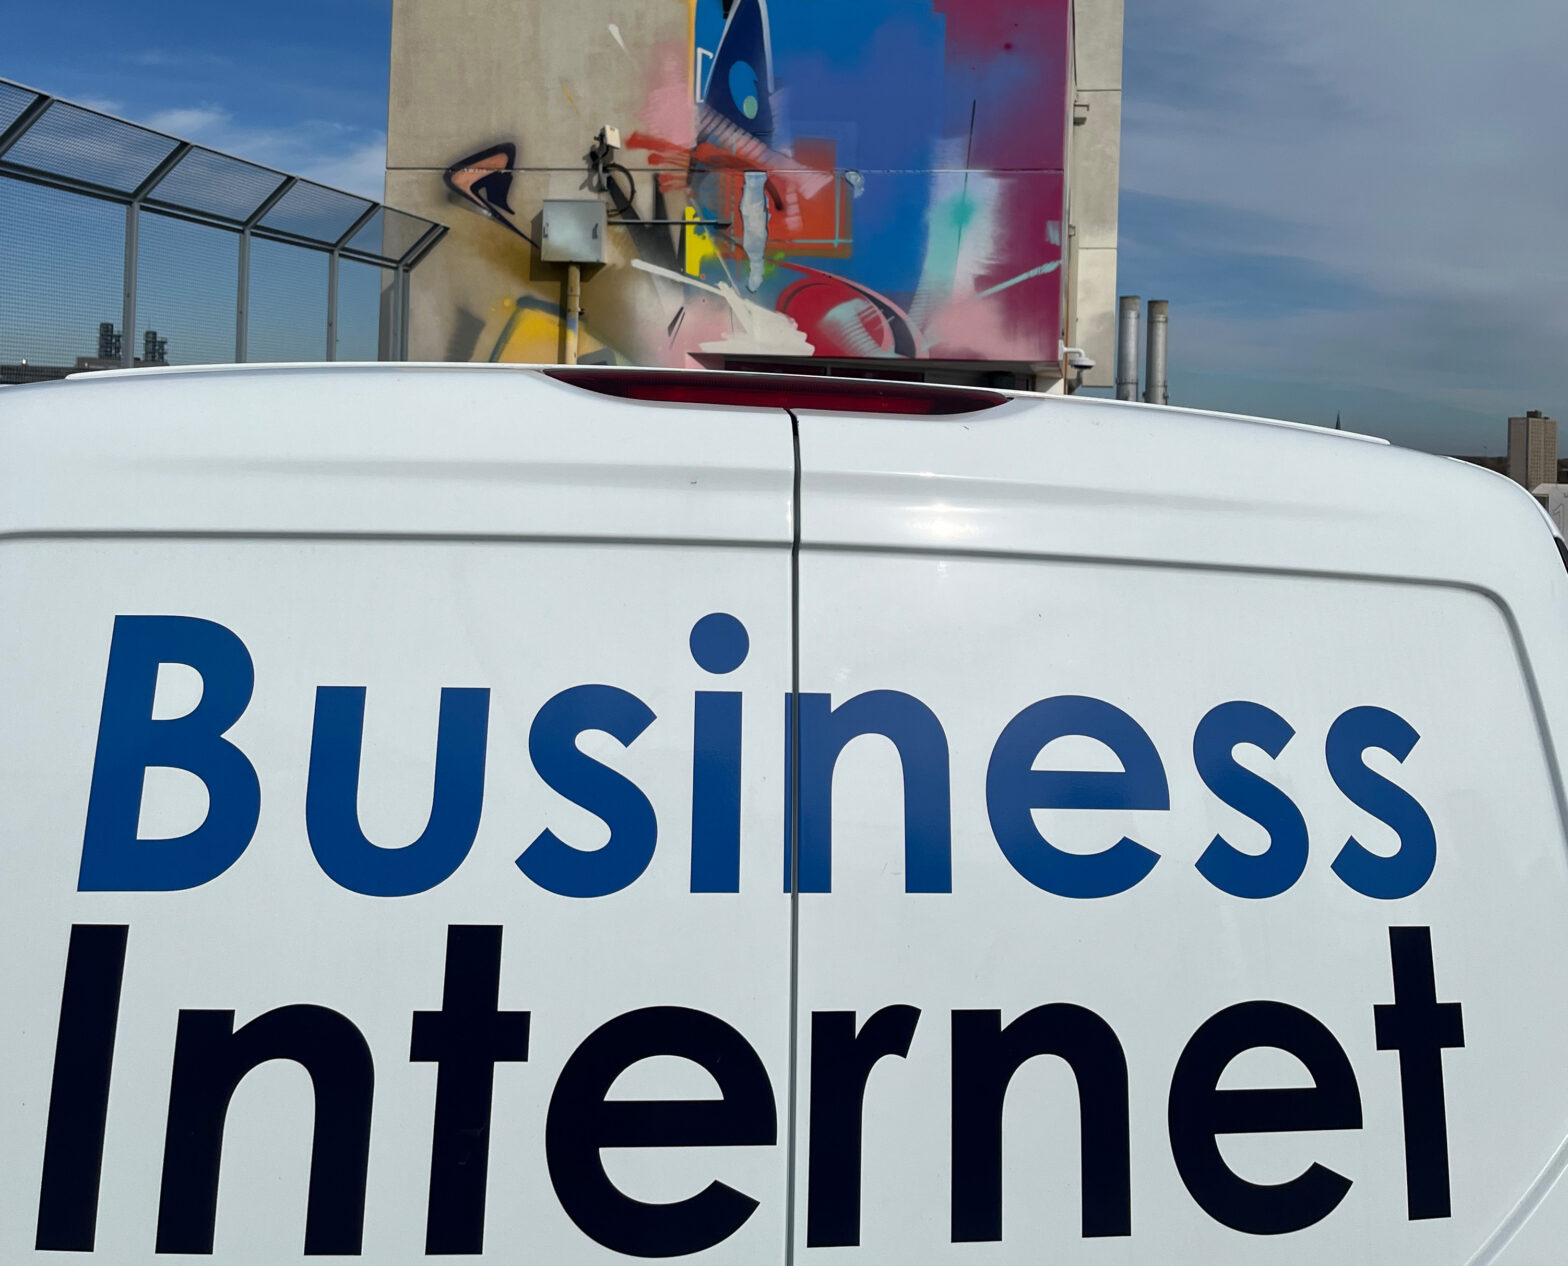 Business Internet for Detroit